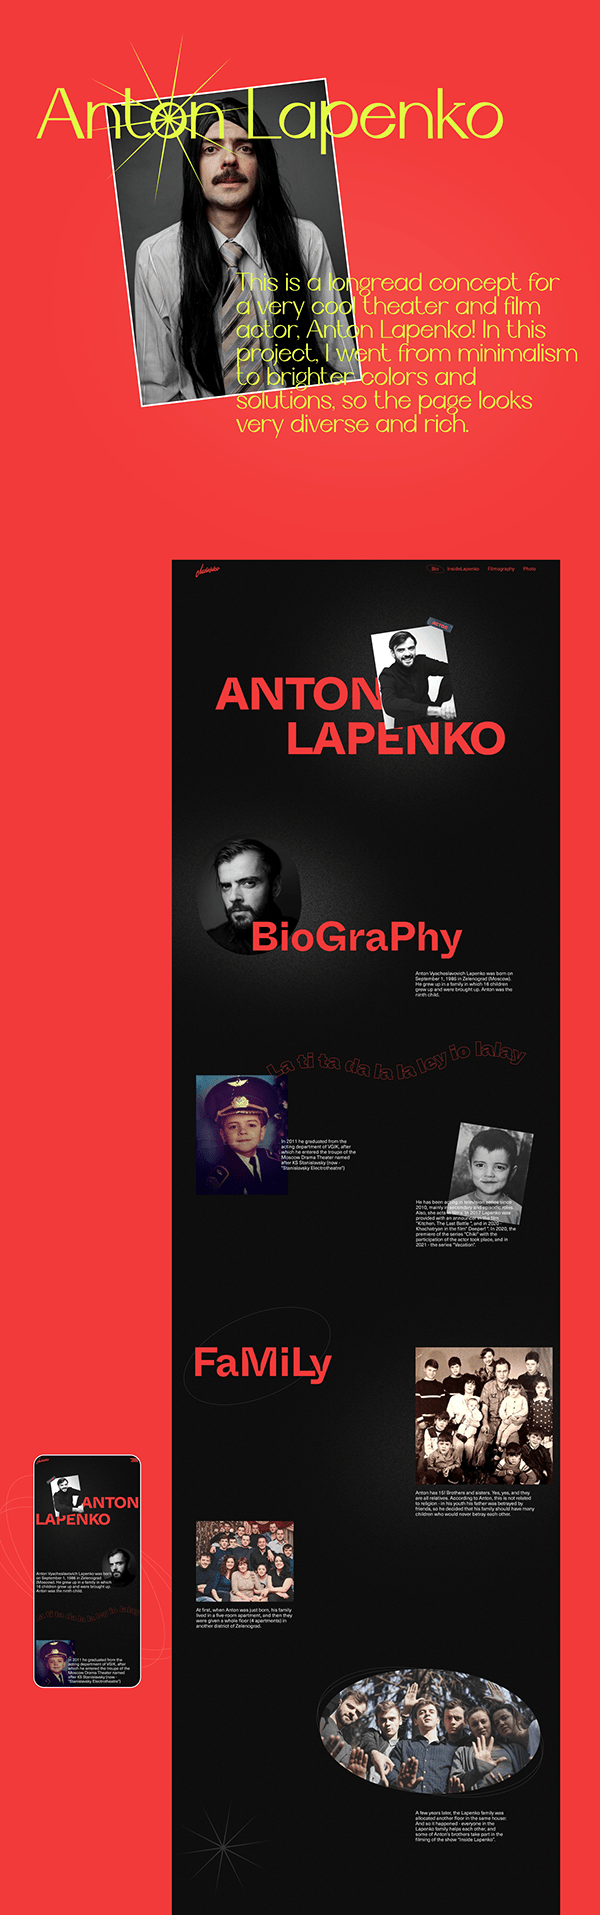 Anton Lapenko - Longread for theater and film actor.